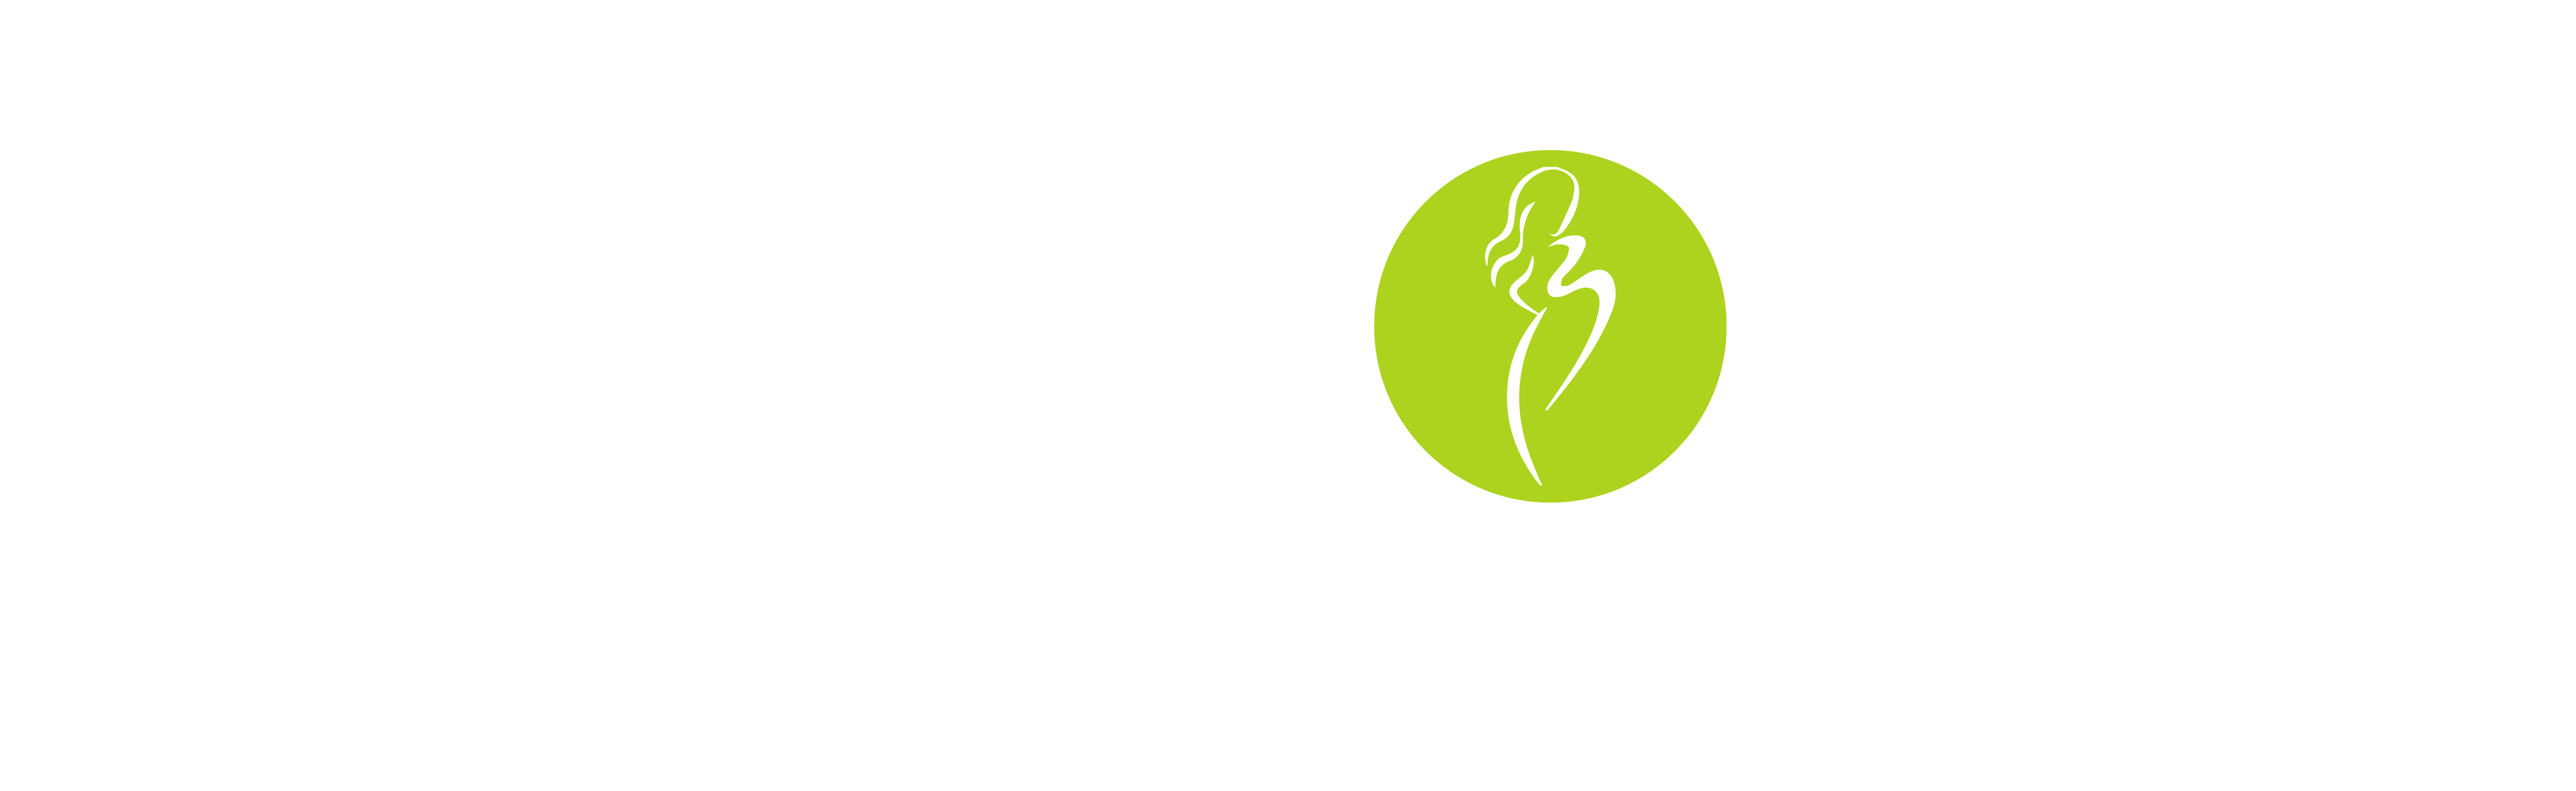 Belladonna Medical Wellness